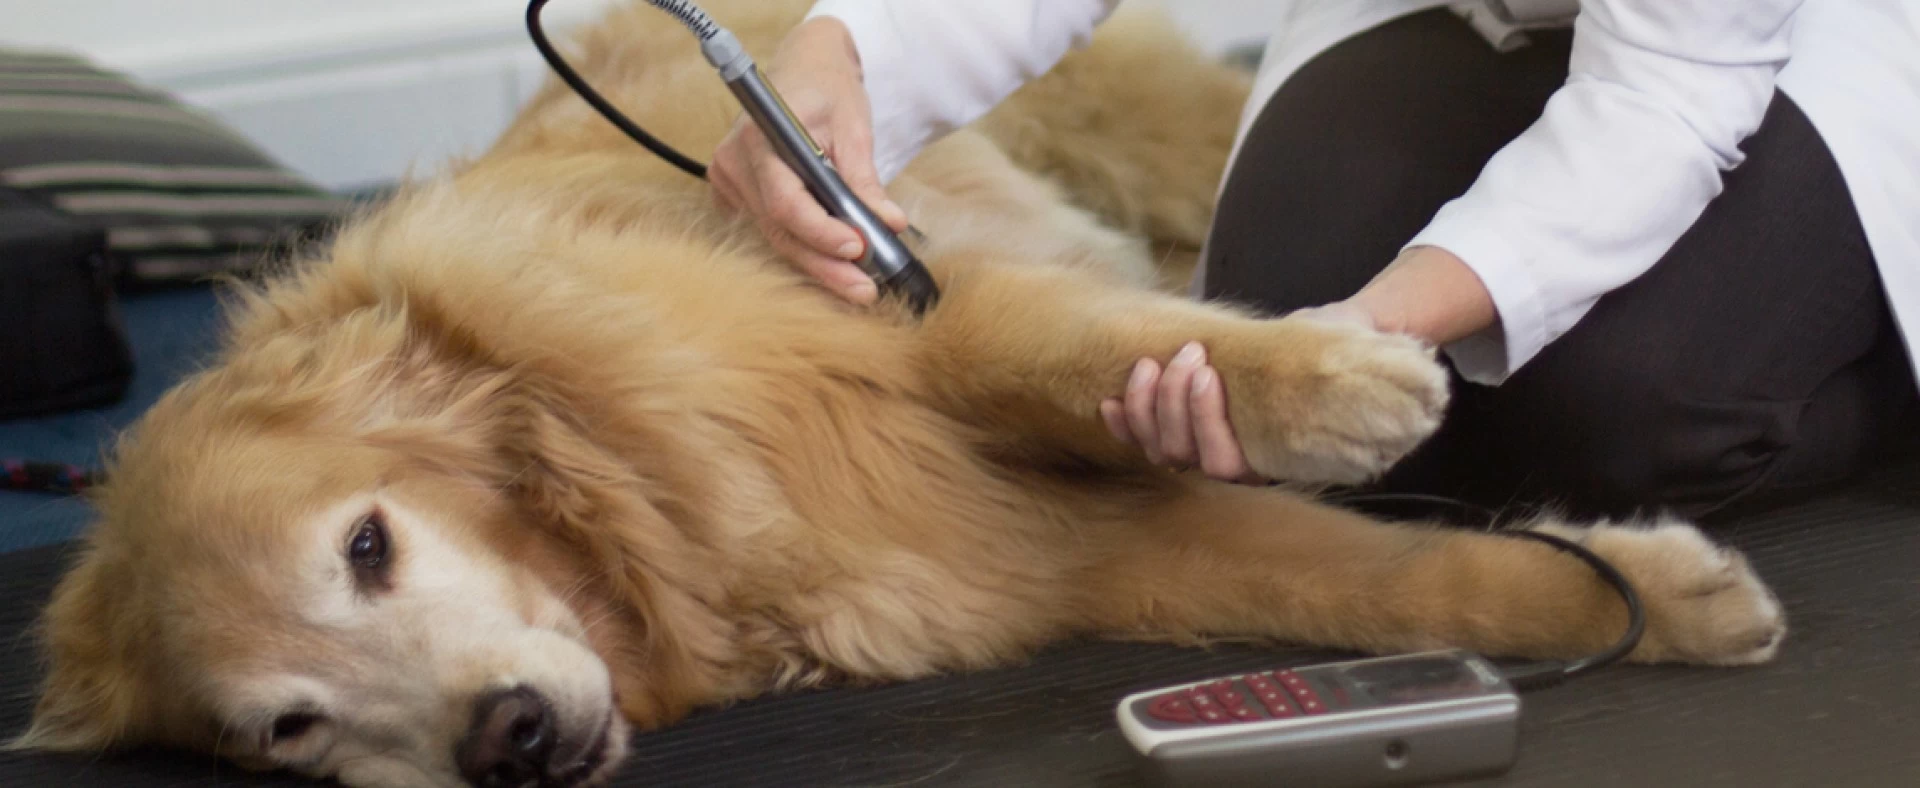 Laserterapia pare Cães